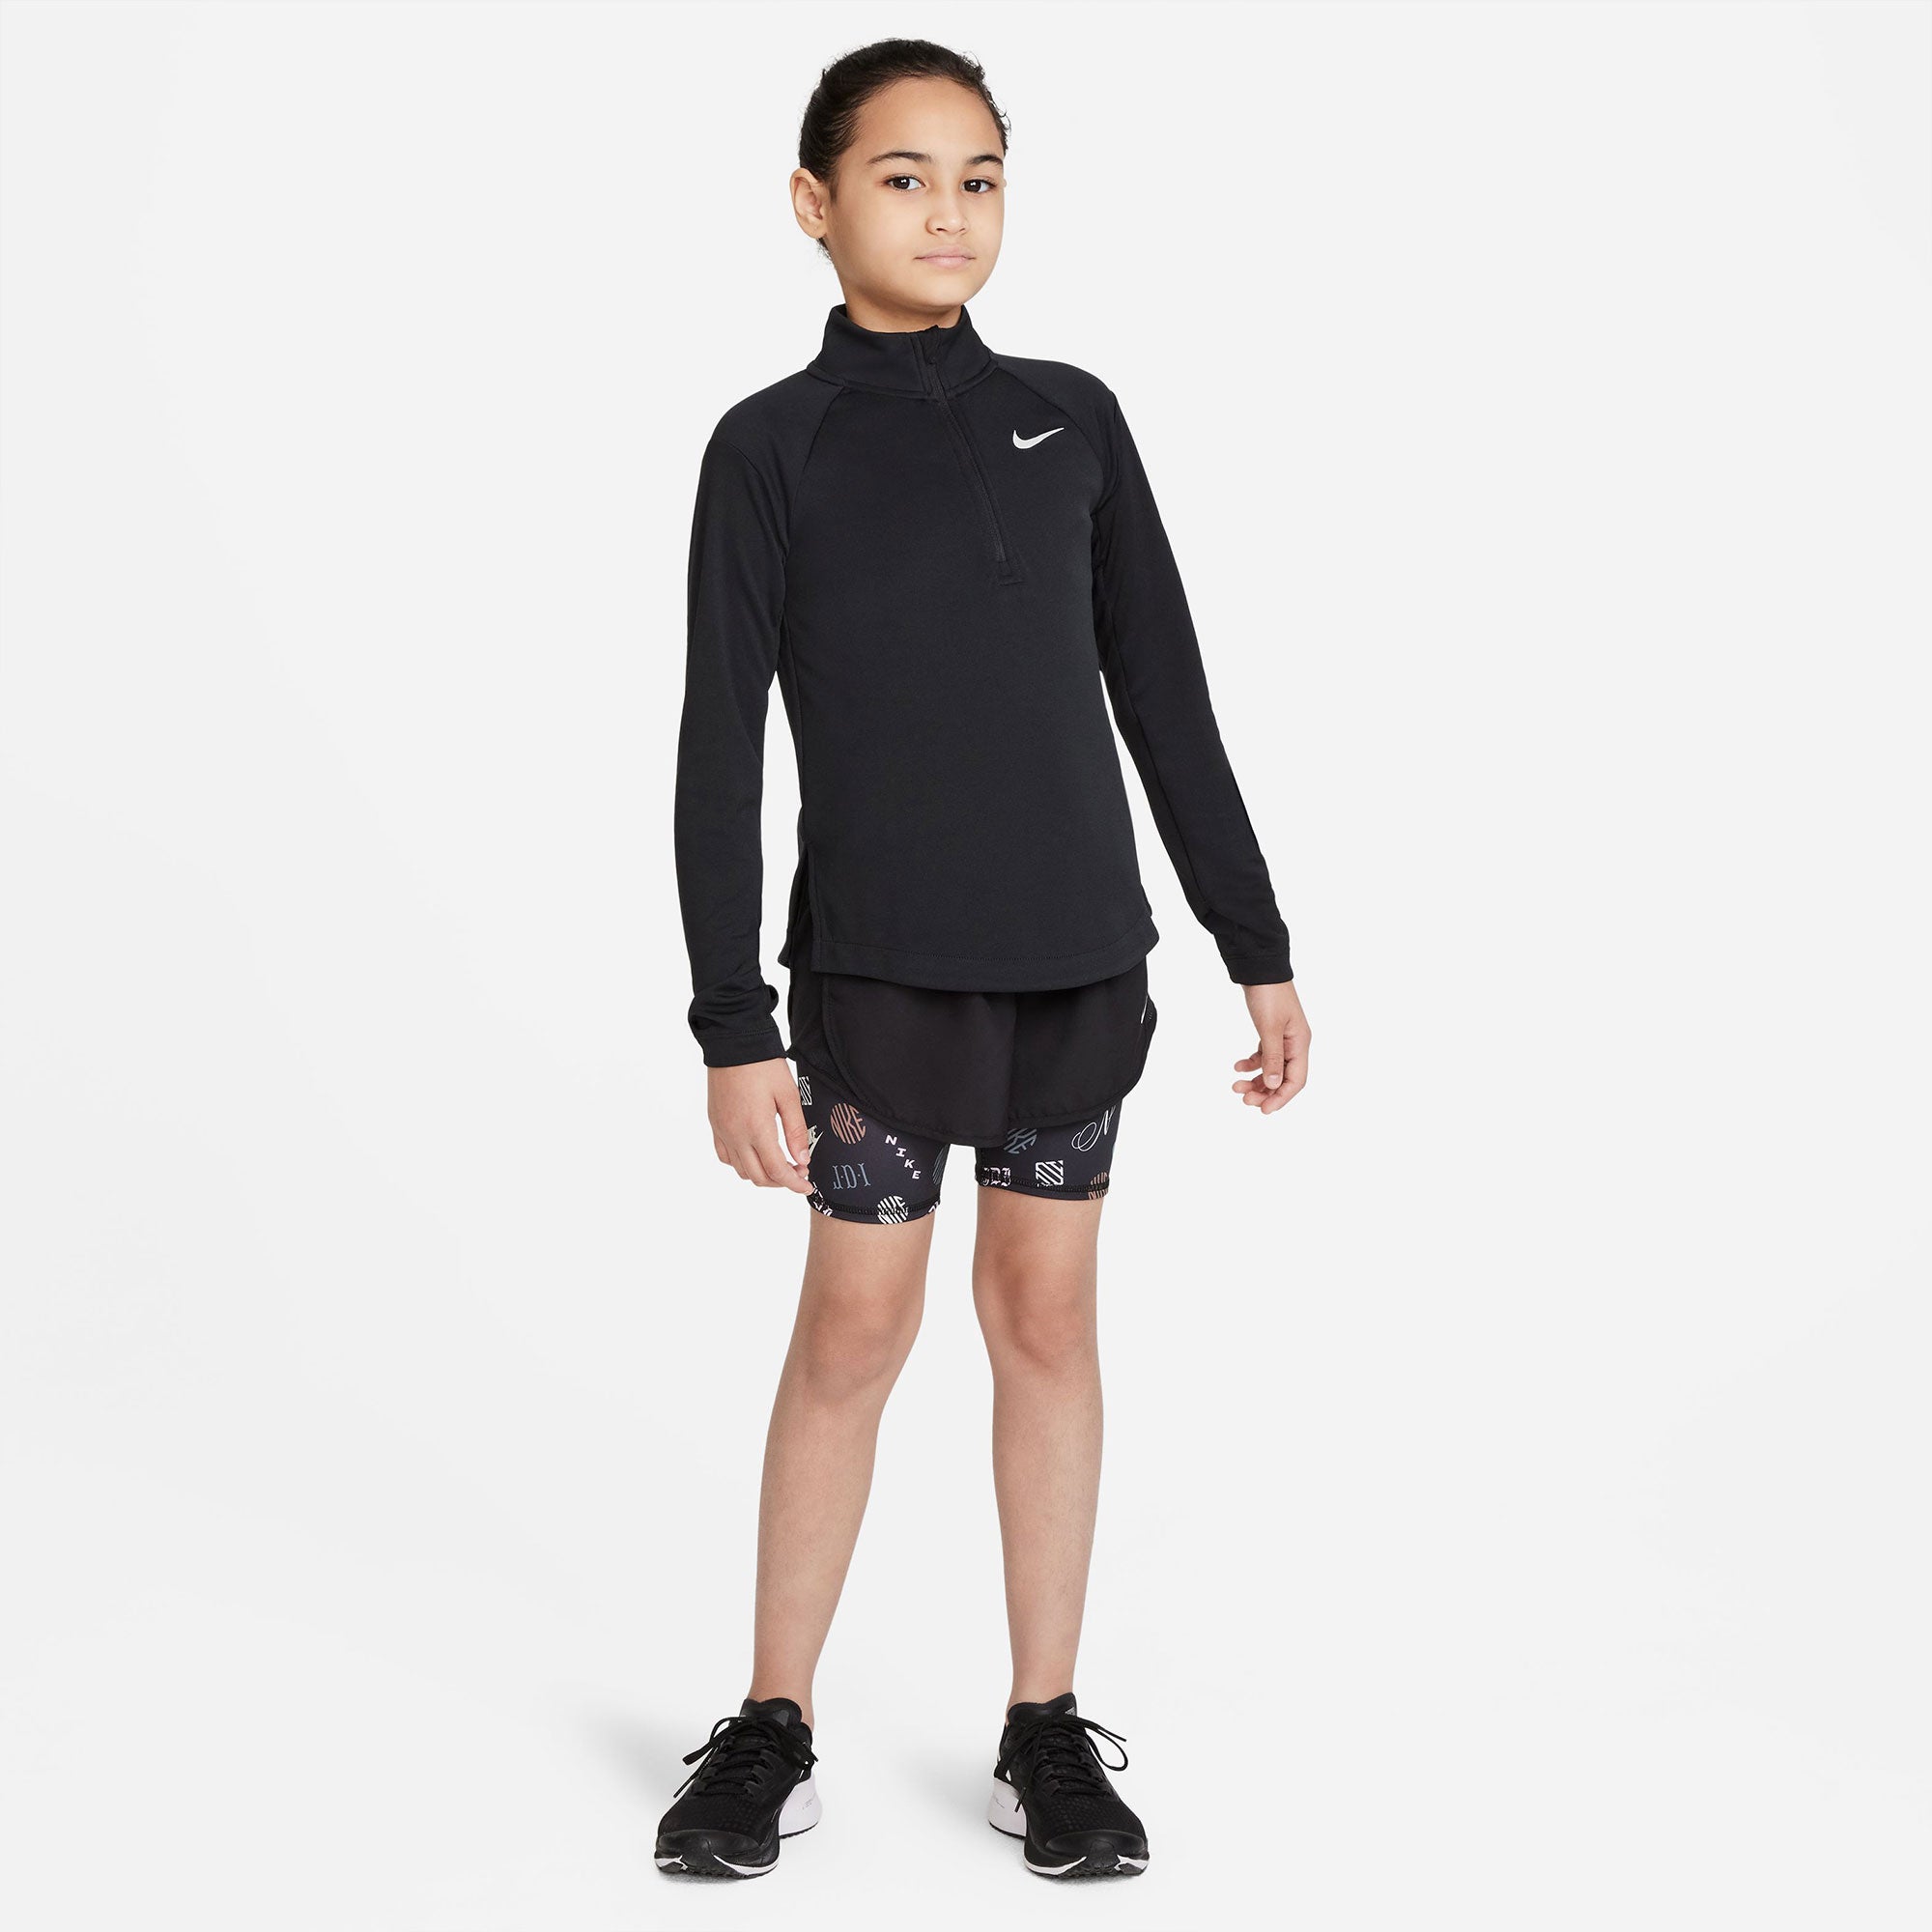 Nike Dri-FIT Girls' Long-Sleeve Top Black (5)